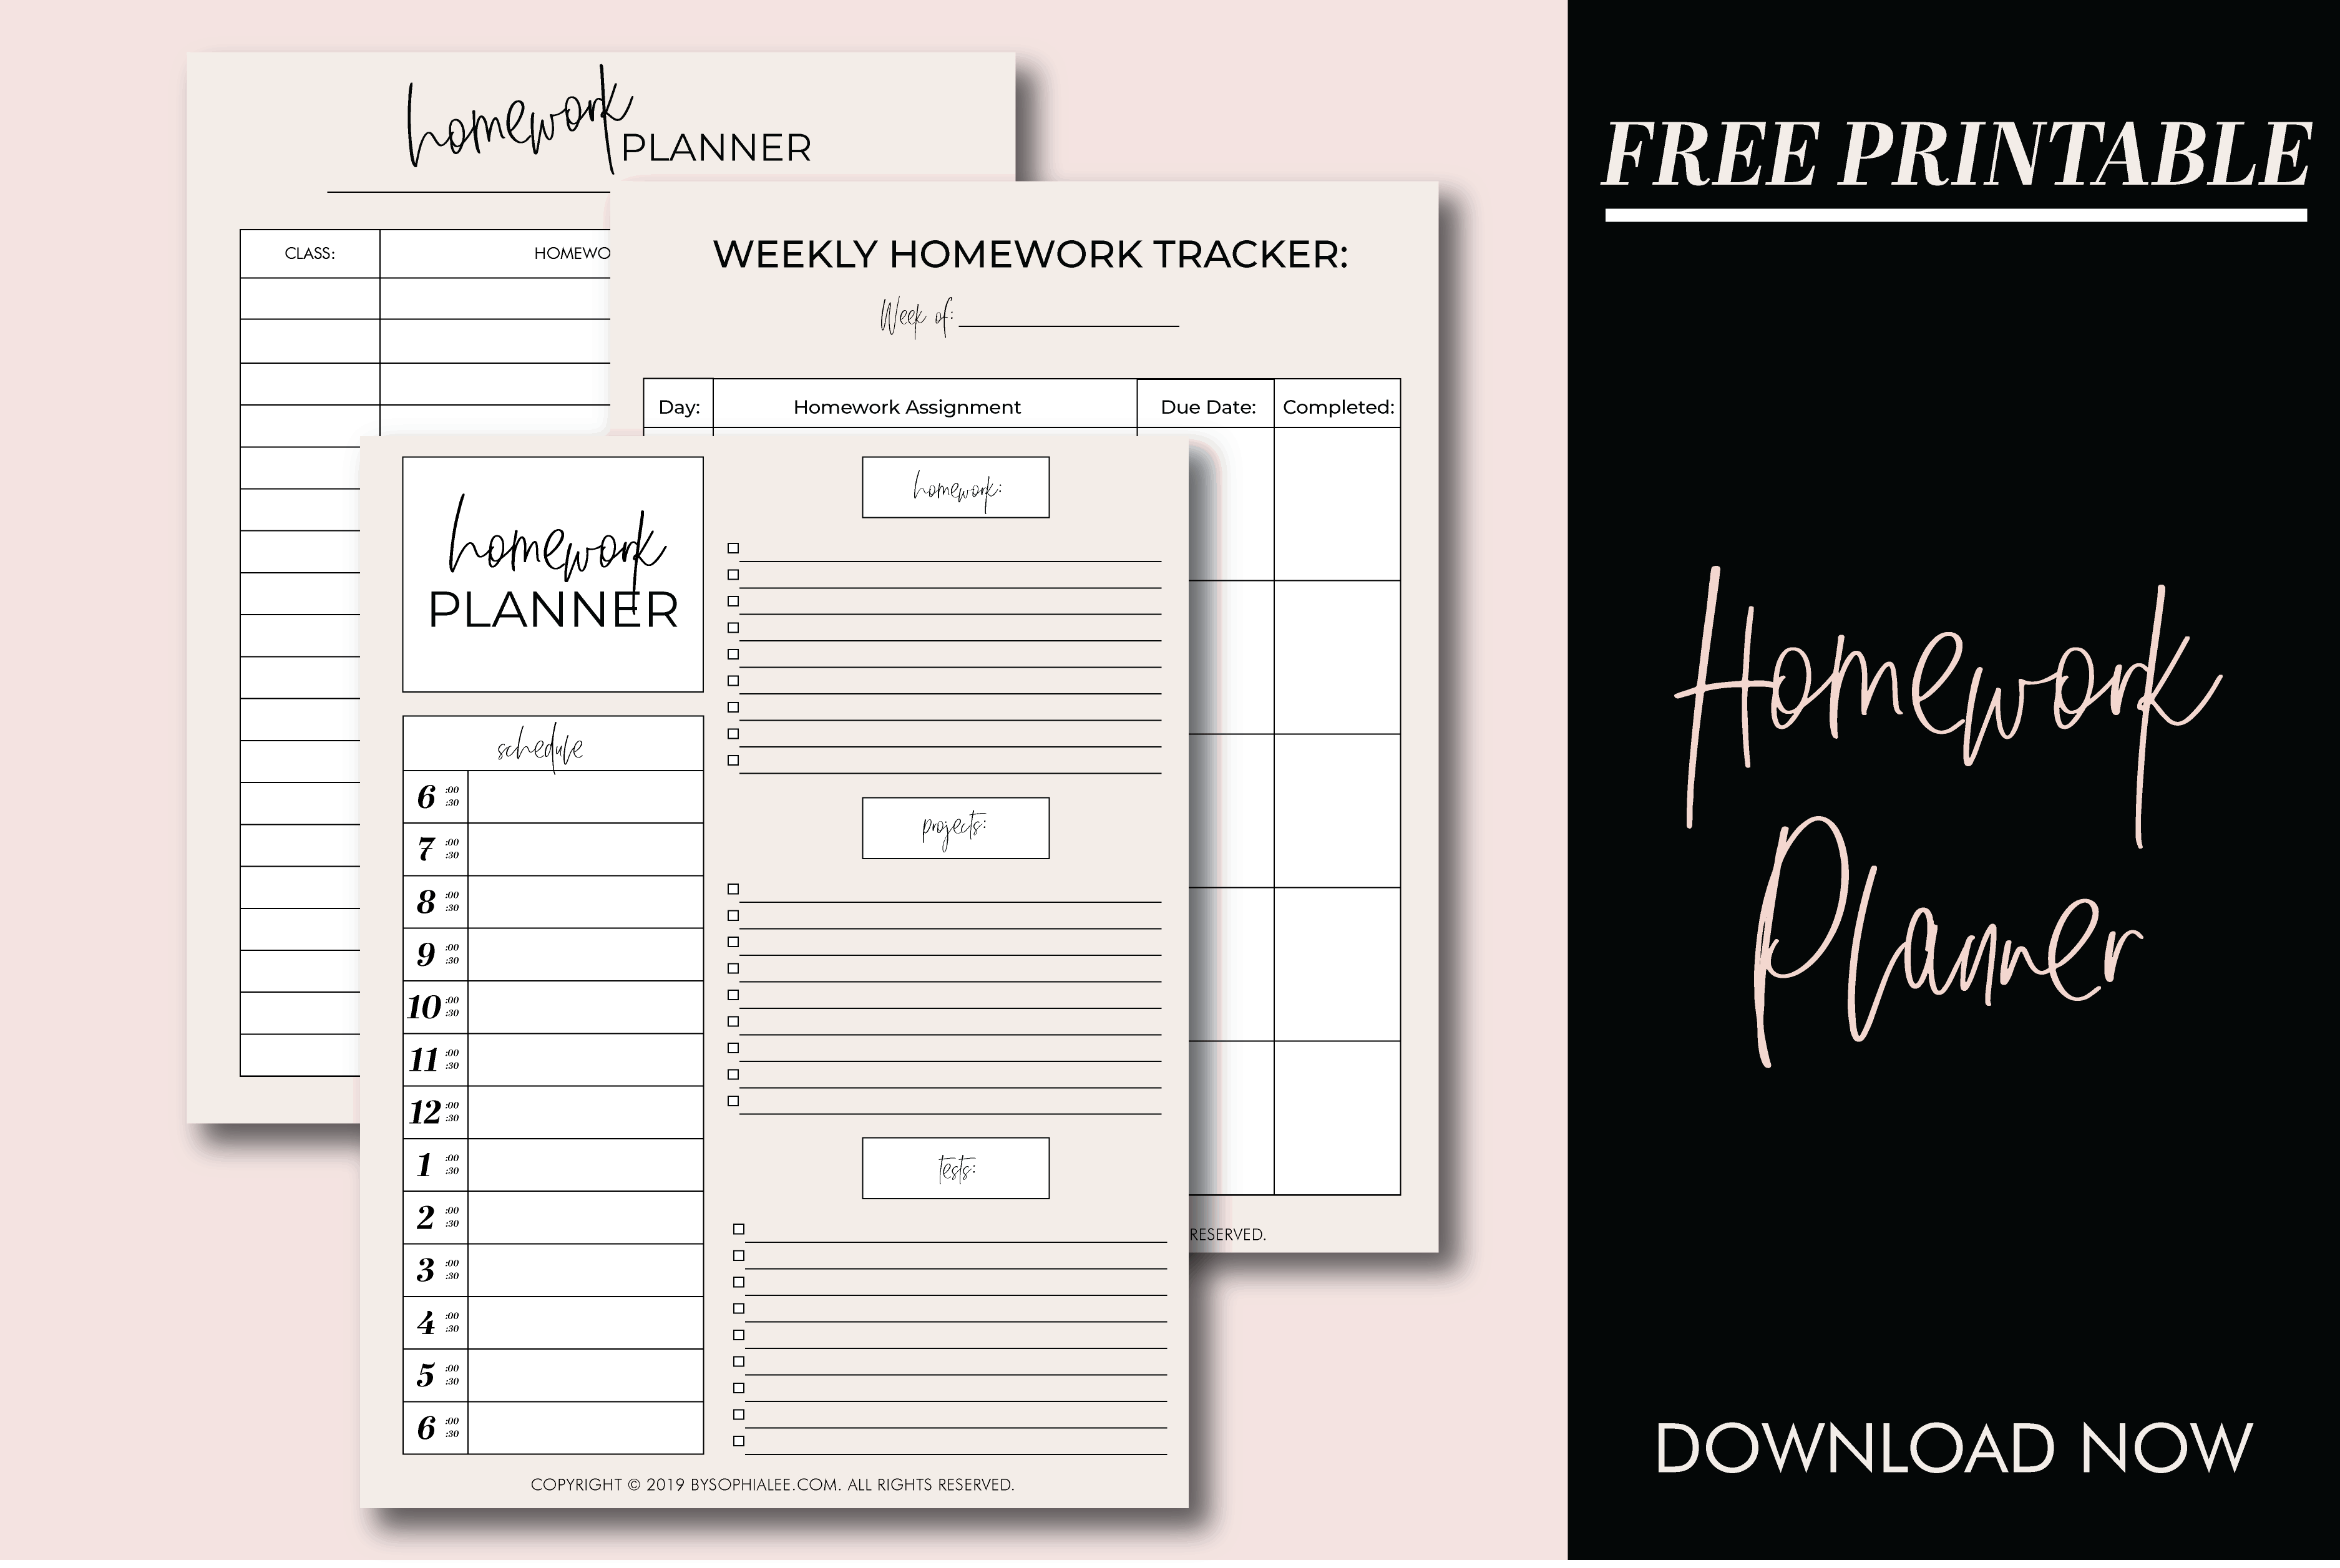 The Best Homework Planner Every Student Needs Free Printable By Sophia Lee